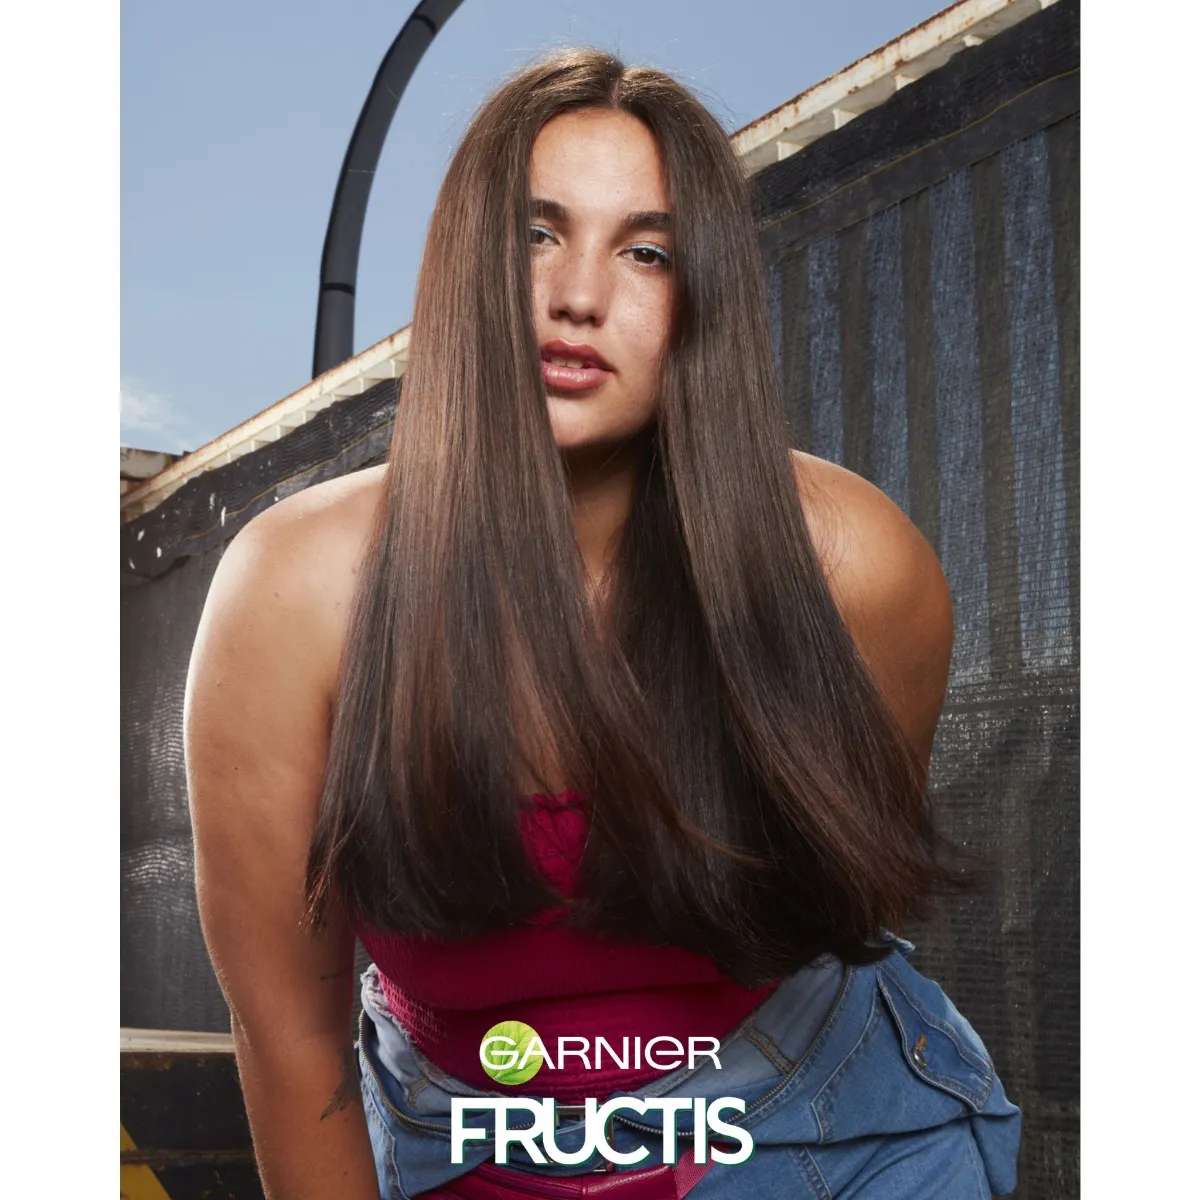 Garnier Fructis Goodbye Damage šampon na poškozené vlasy 250 ml